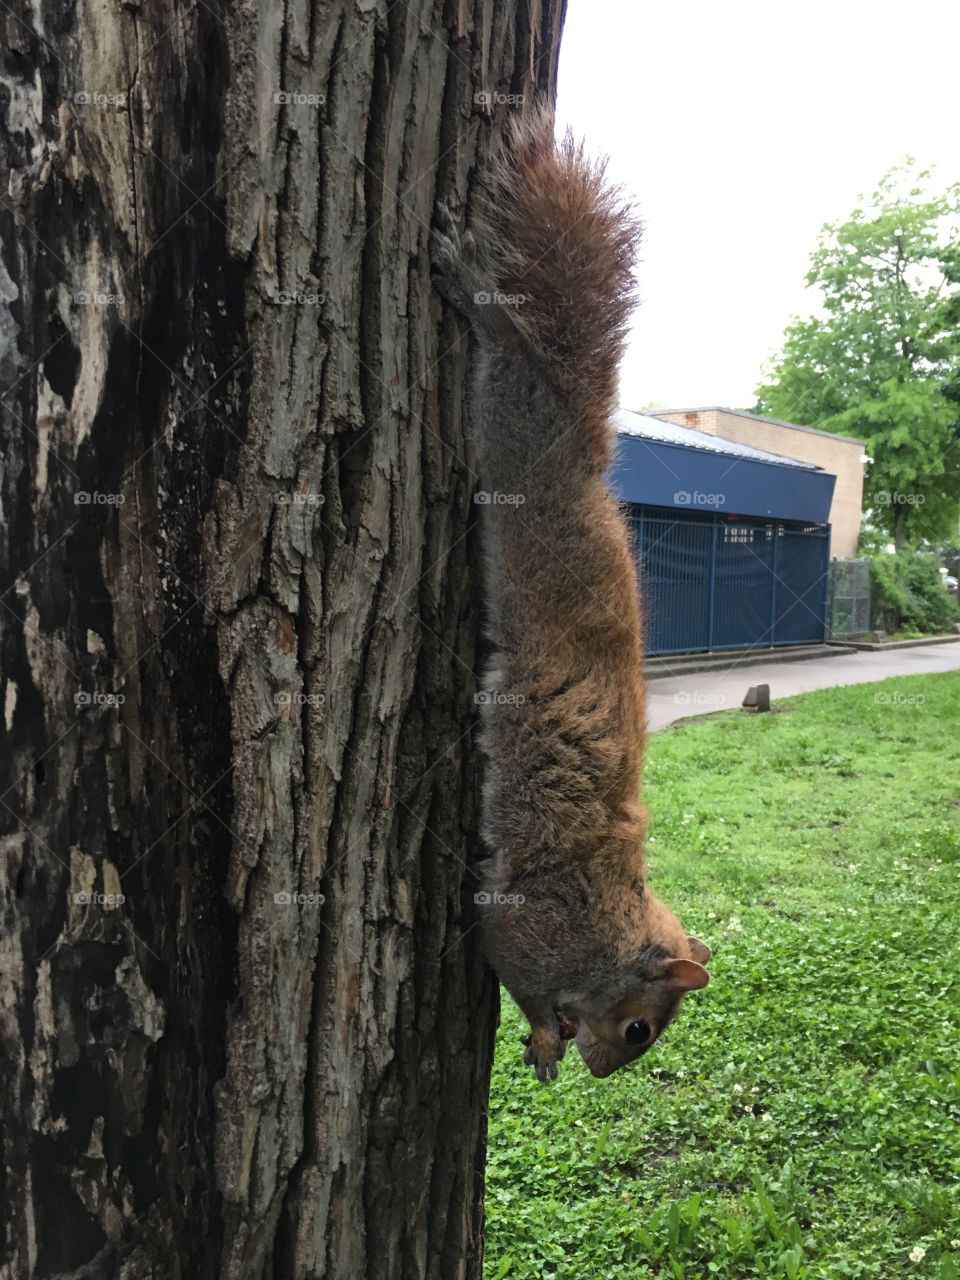 Squirrel lunch upside down